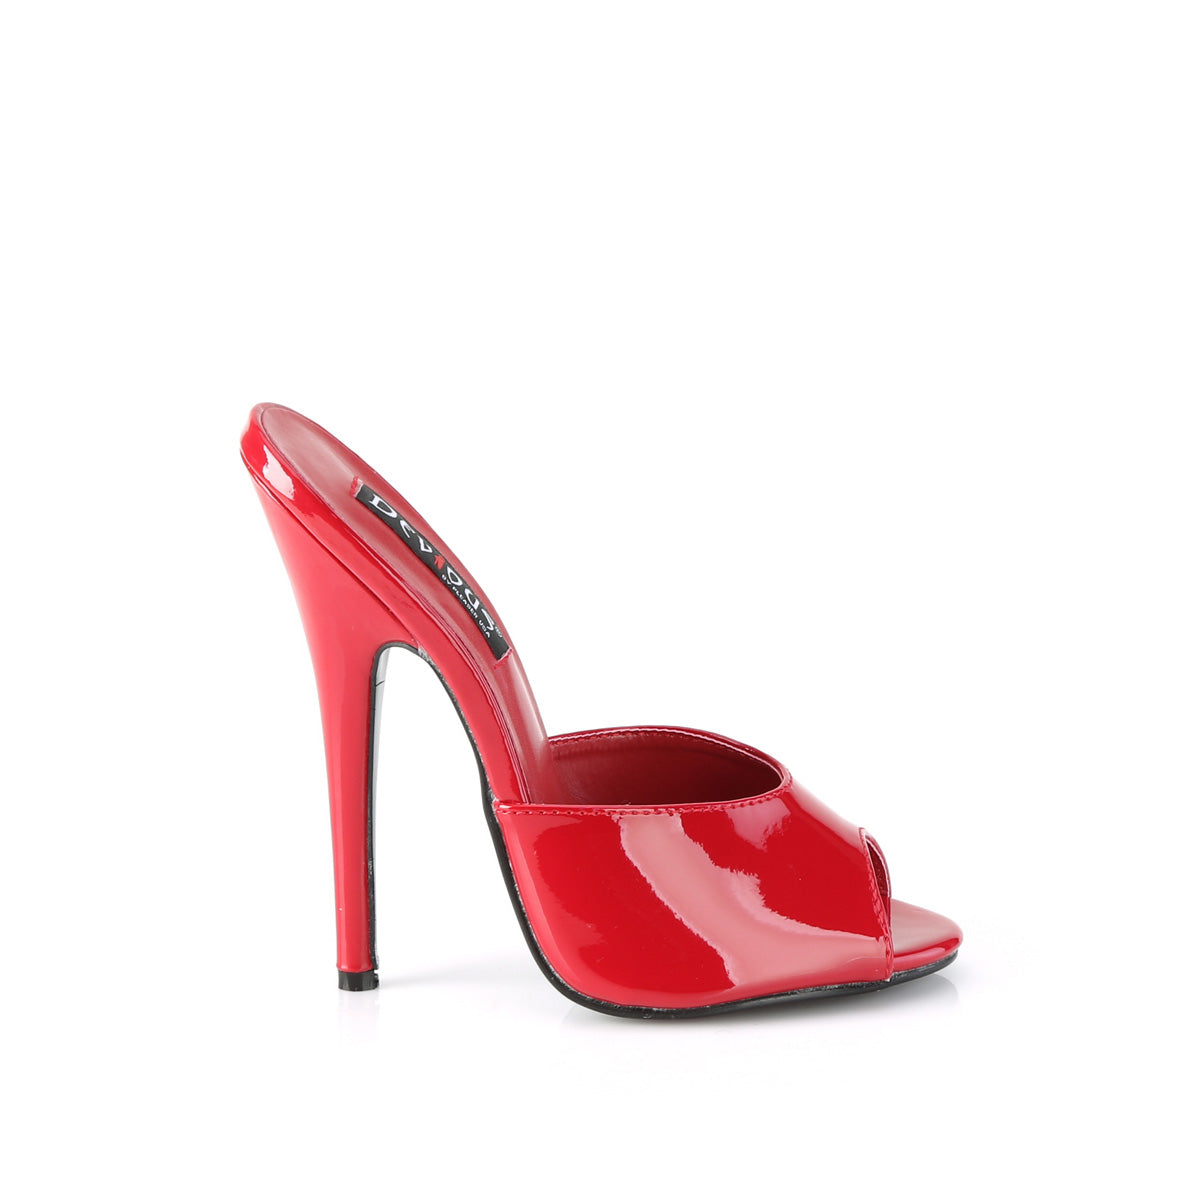 6 Inch Heel DOMINA-101 Red Patent